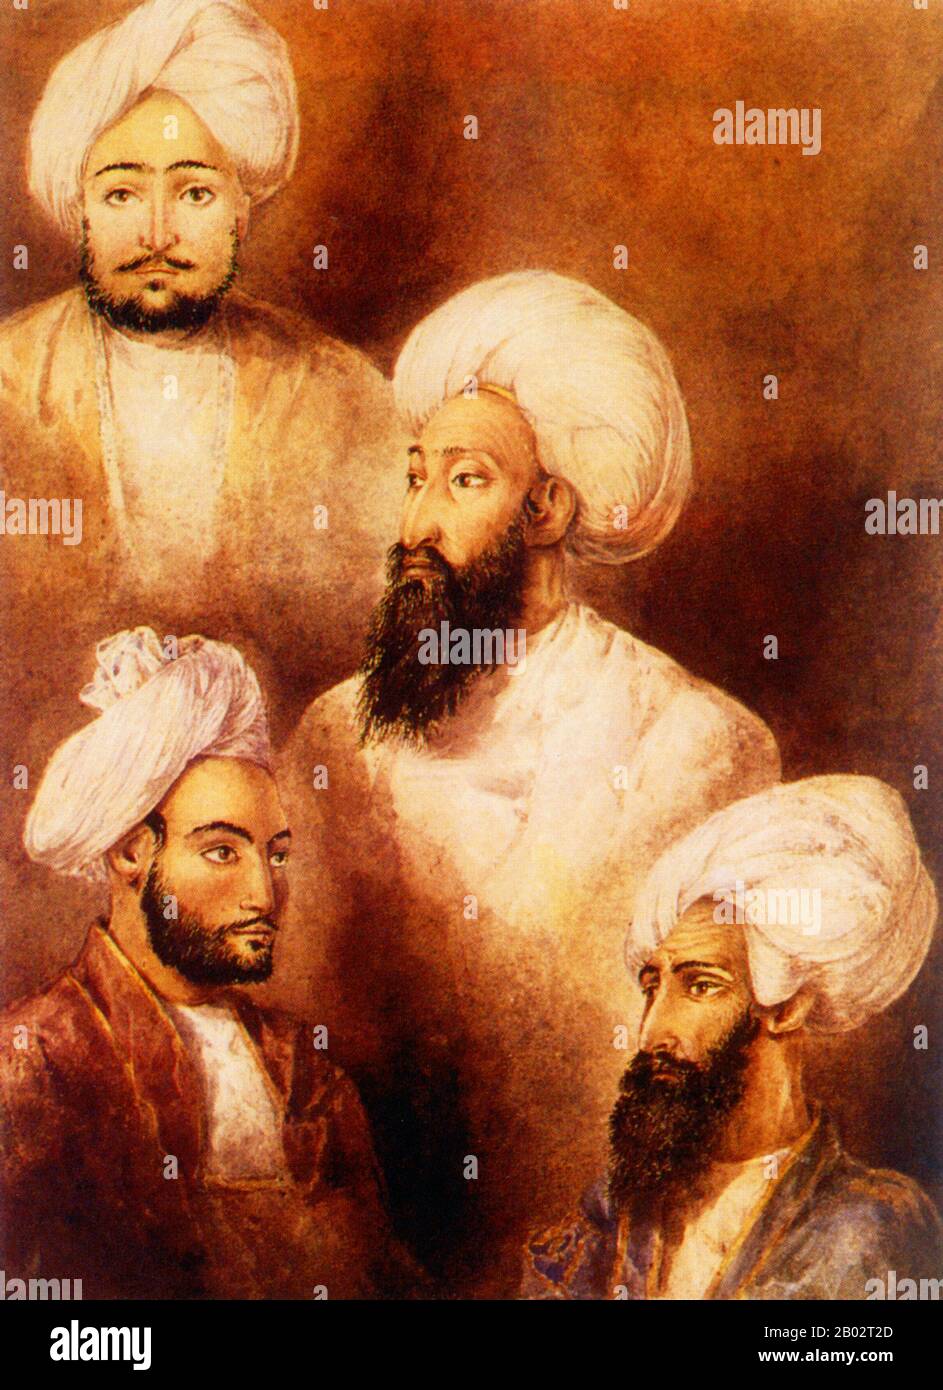 Da cima a fondo, da sinistra a destra: Doga Mohammed, Haider Khan, Mohammed Akram Khan e Abdul Ghani Khan, tutti tenuti prigionieri dagli inglesi a Ludhiana, 1840s Foto Stock